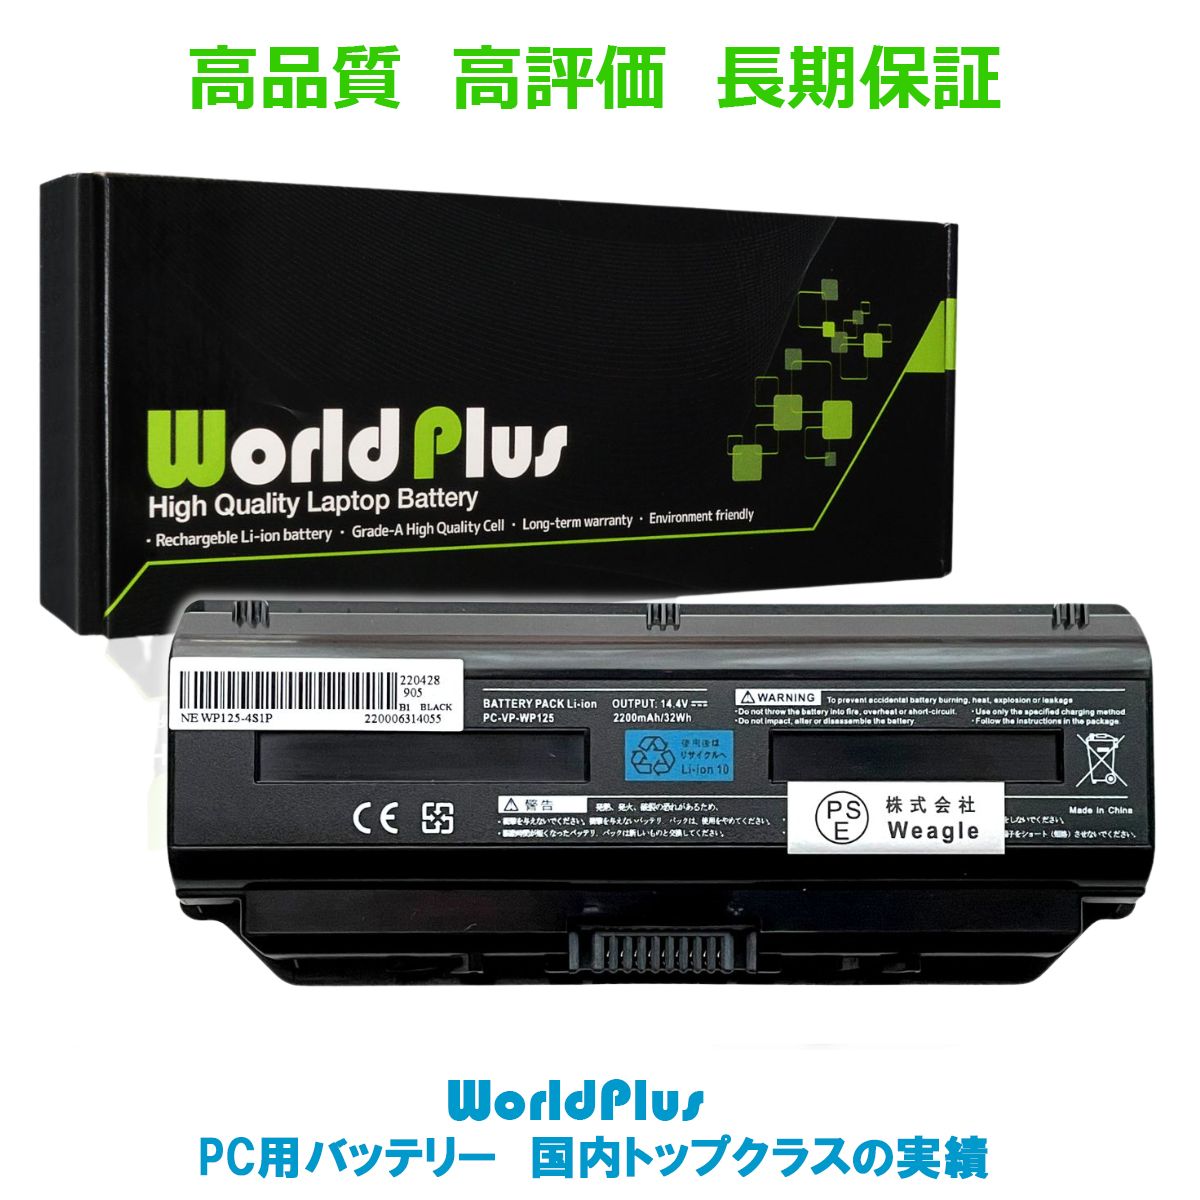 WorldPlus 互換バッテリー NEC PC-VP-WP125 